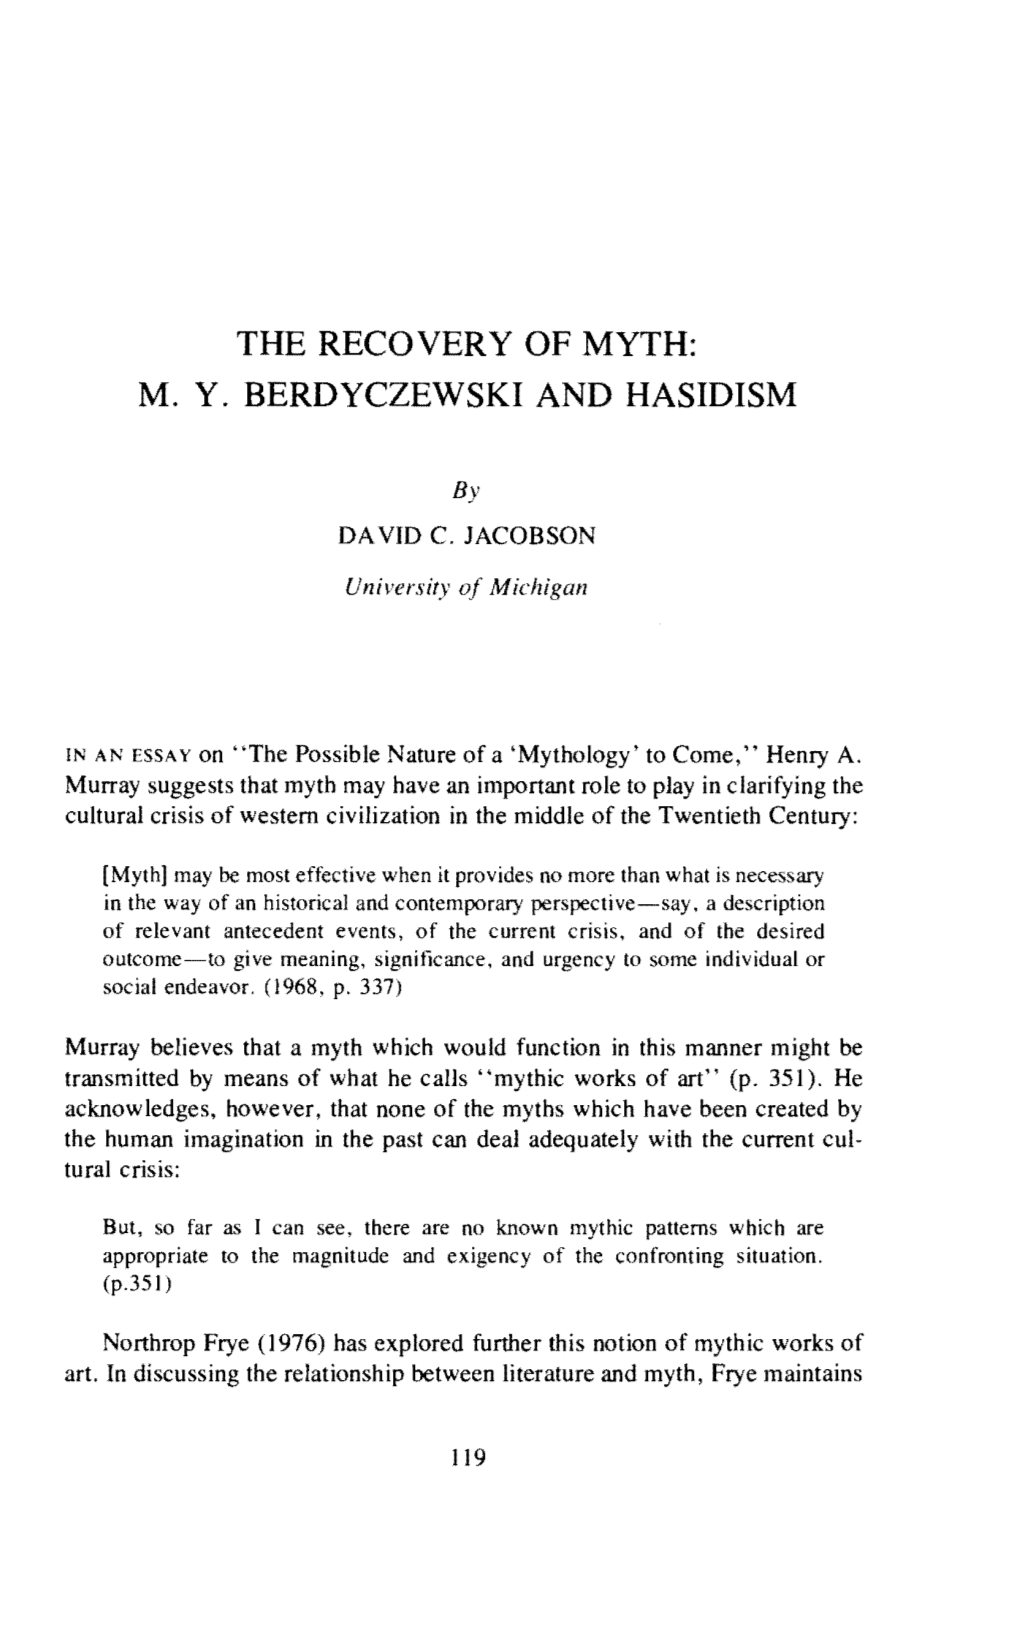 The Recovery of Myth: M. Y. Berdyczewski and Hasidism